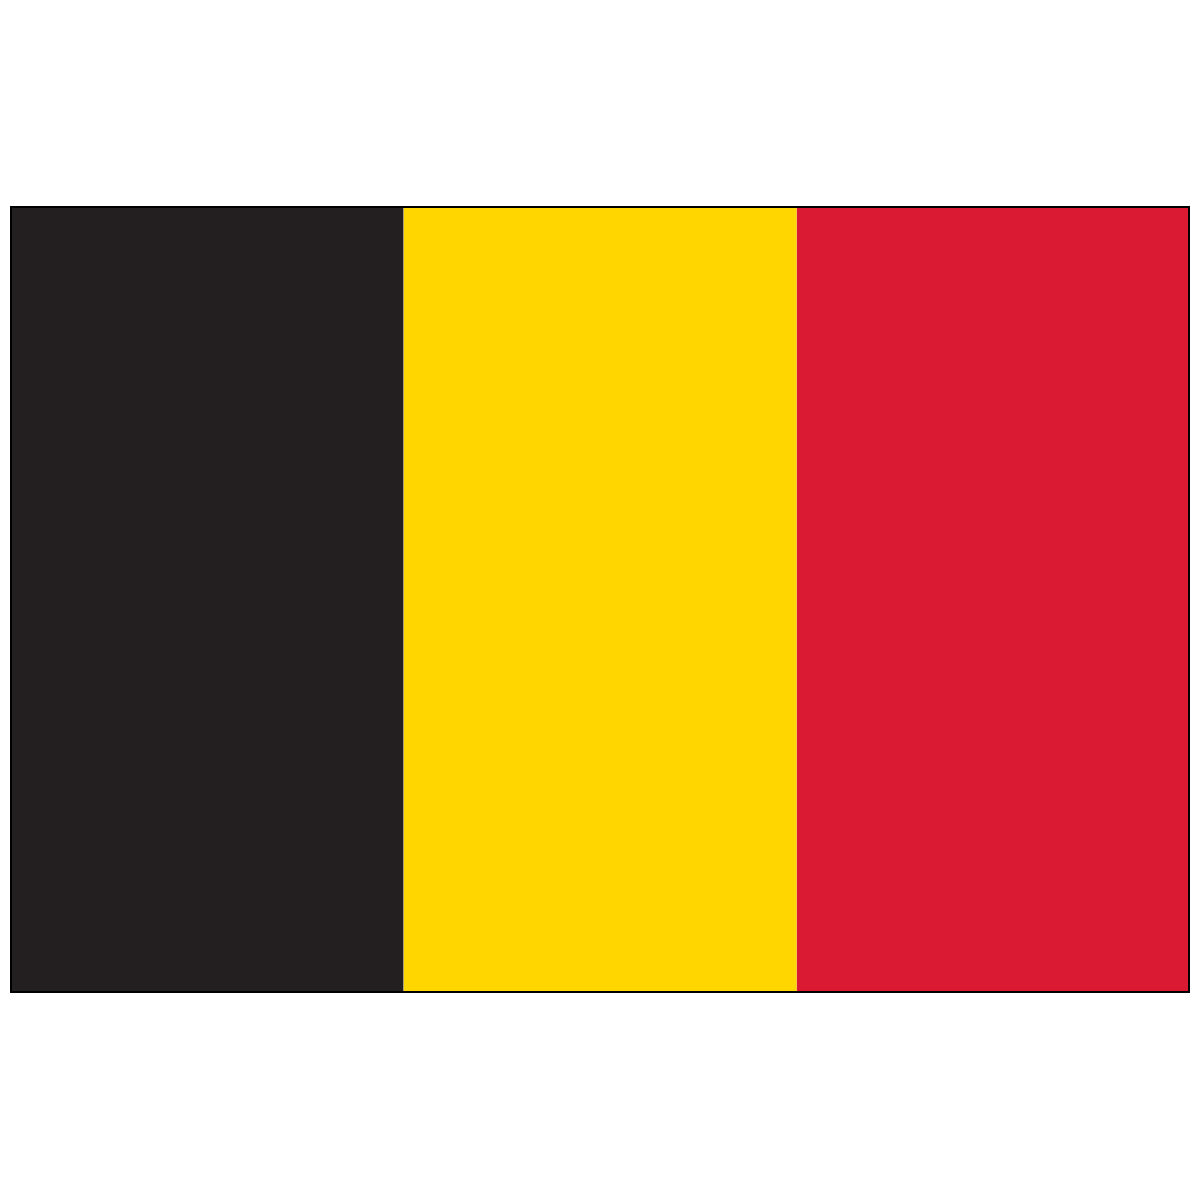 Belgium Flag - Large 5 x 3 FT - Belgian Country Europe